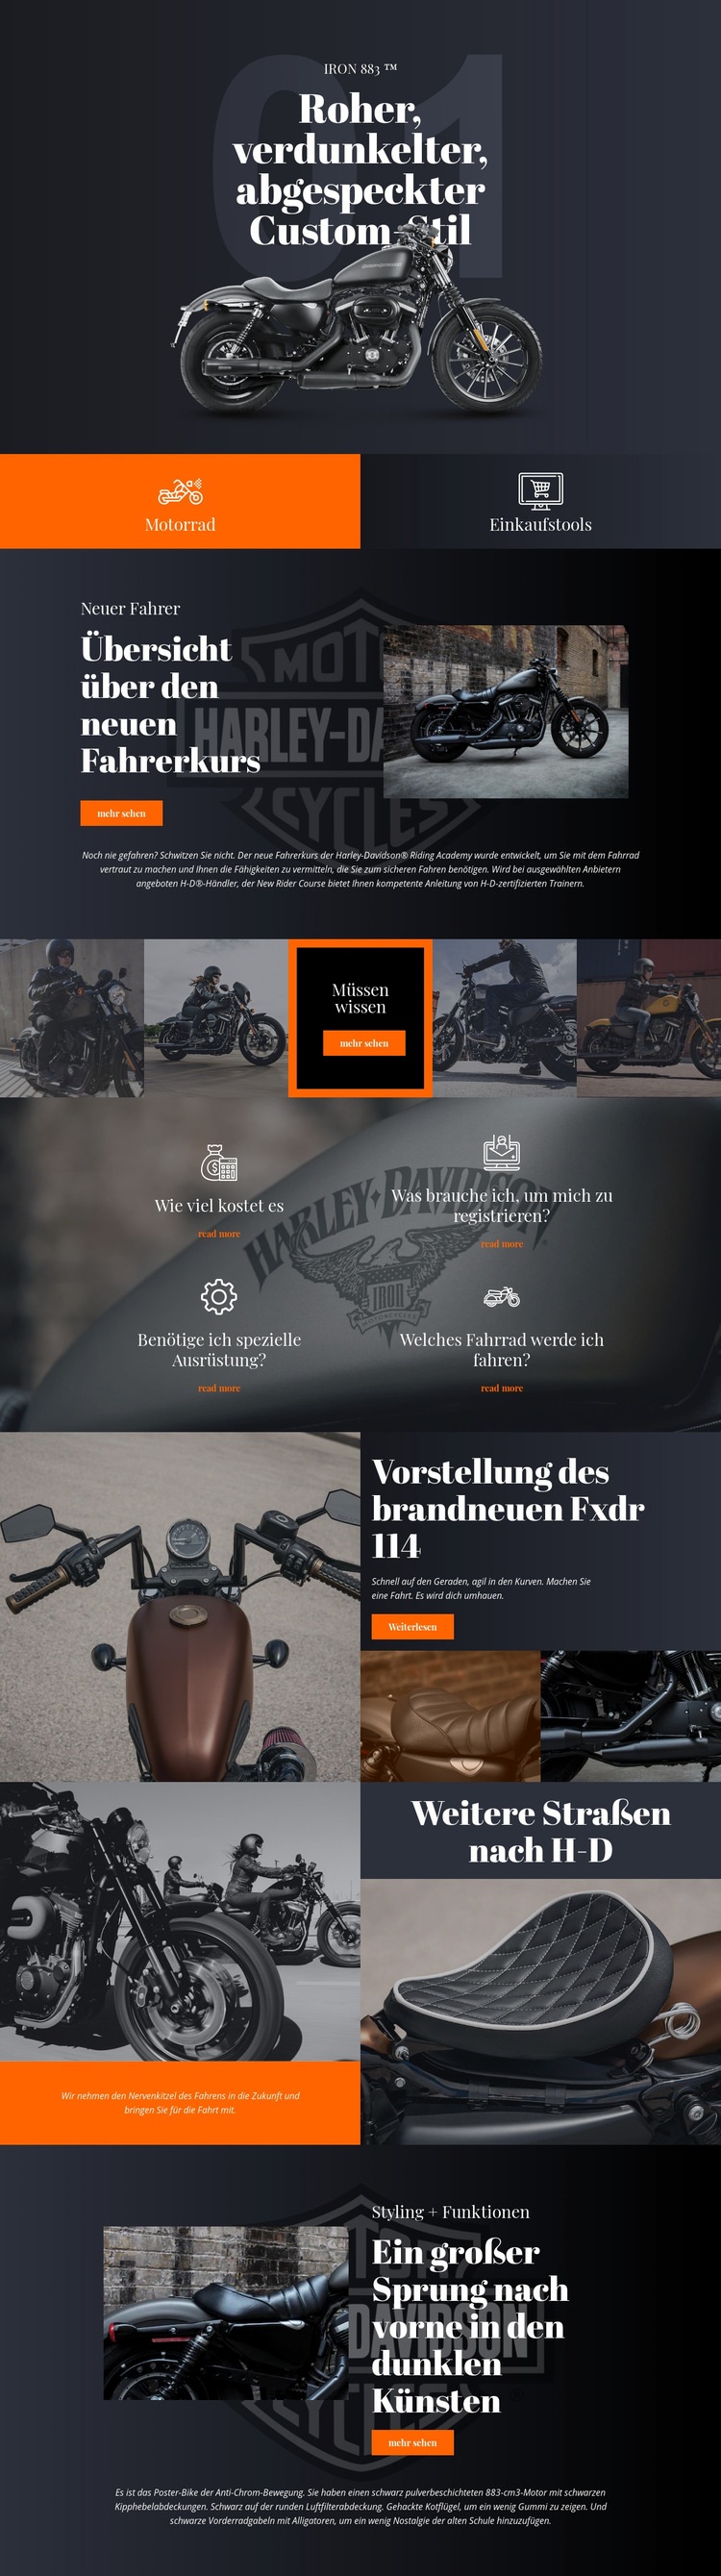 Harley Davidson Website-Modell